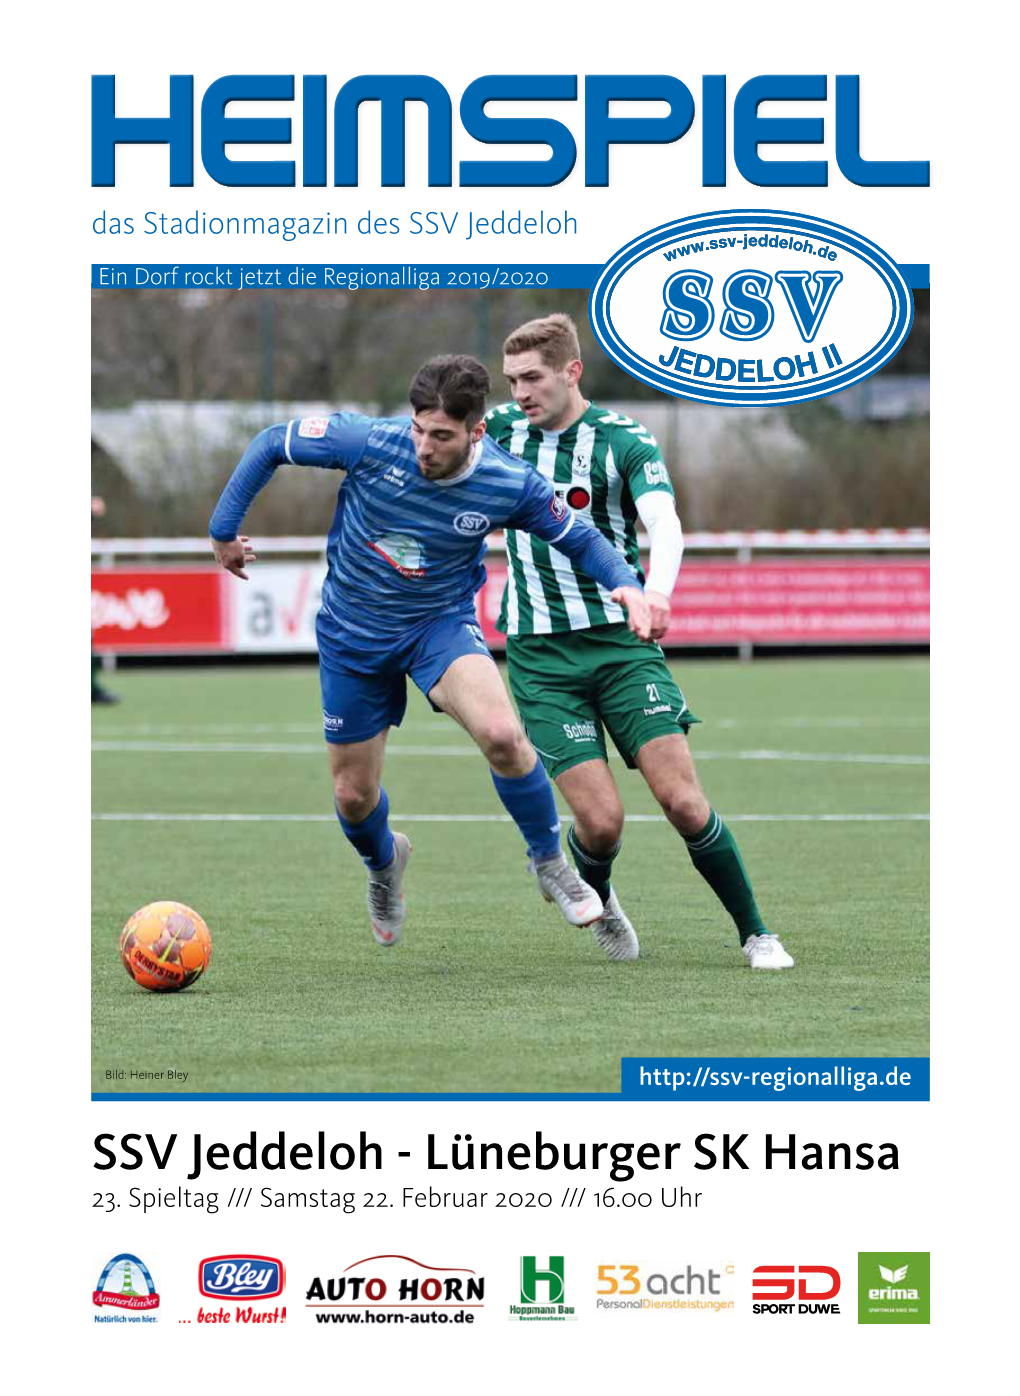 Lüneburger SK Hansa 23